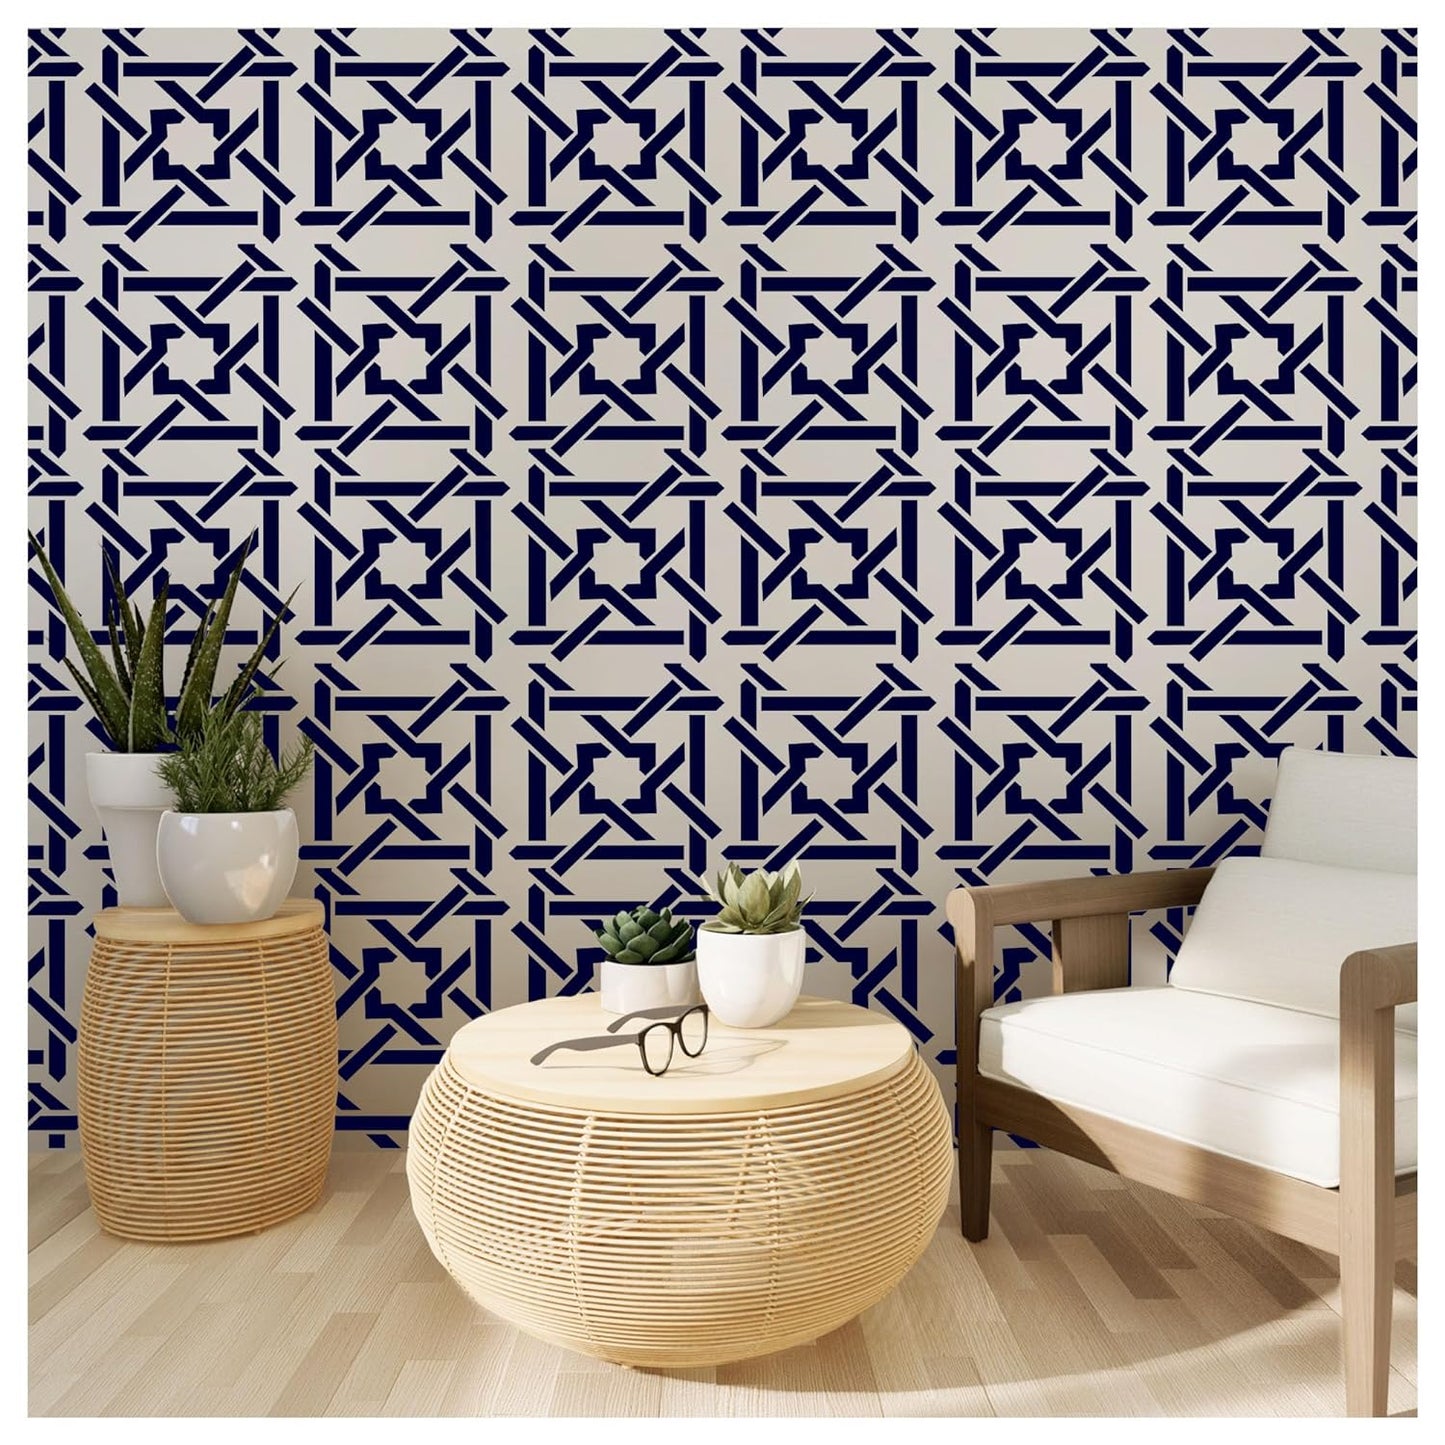 Latest Interlock Geometric Allover Paint Wall Stencil -Pack of 1